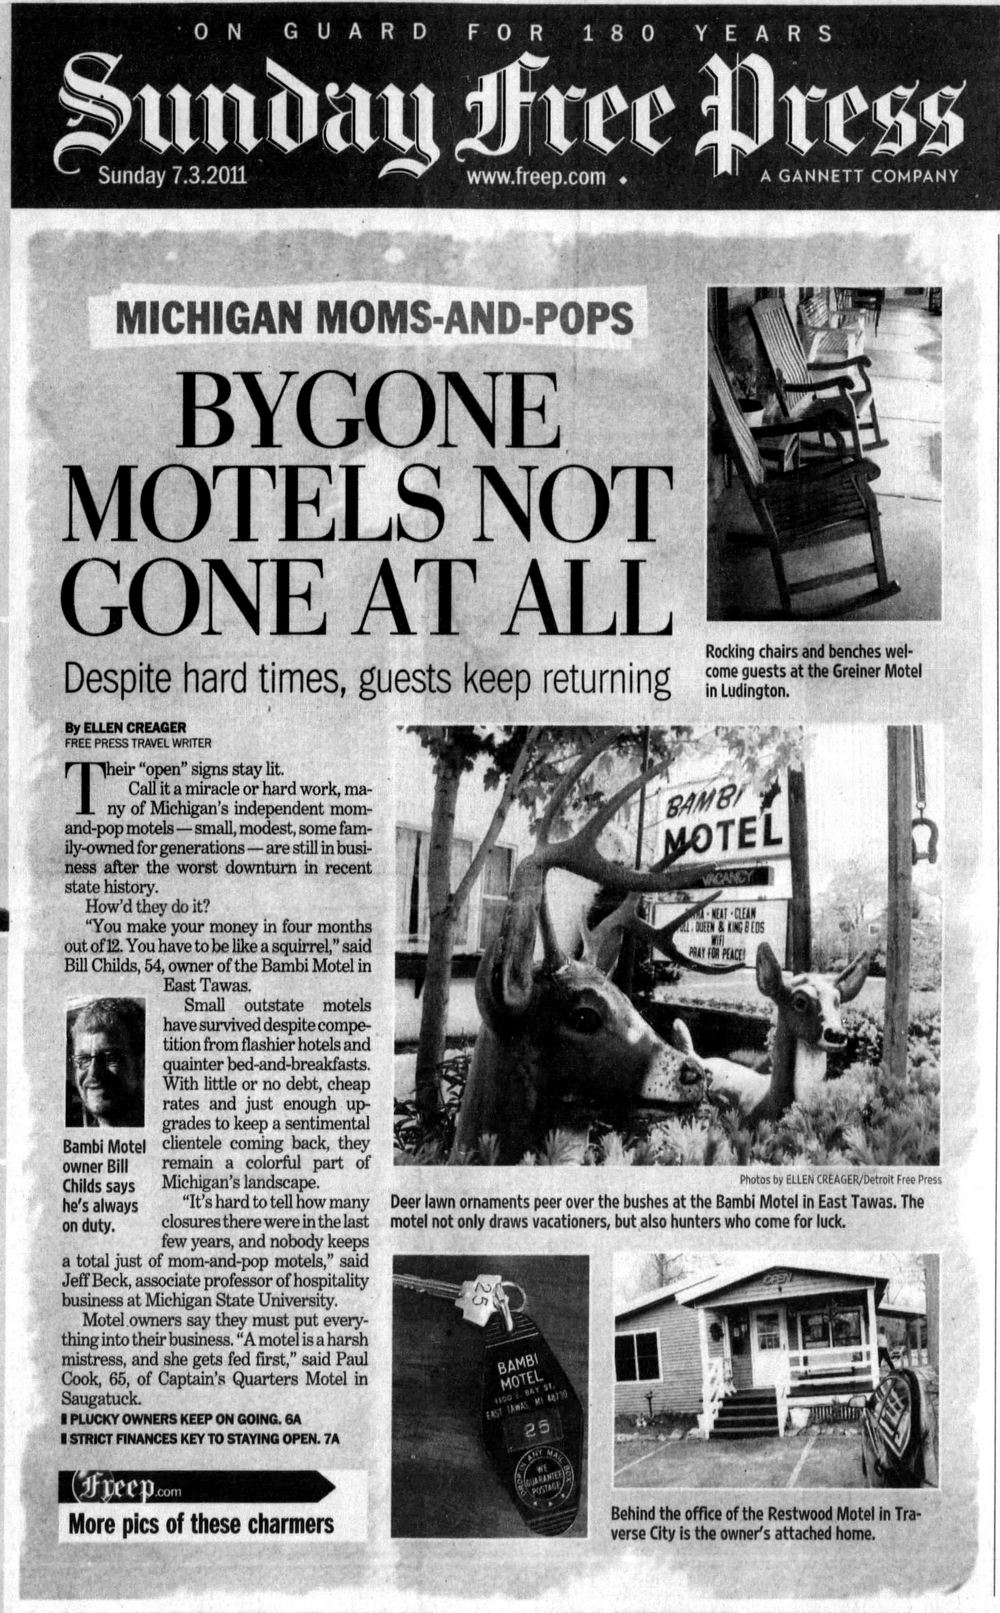 Bambi Motel - Jul 3 2011 Feature Article